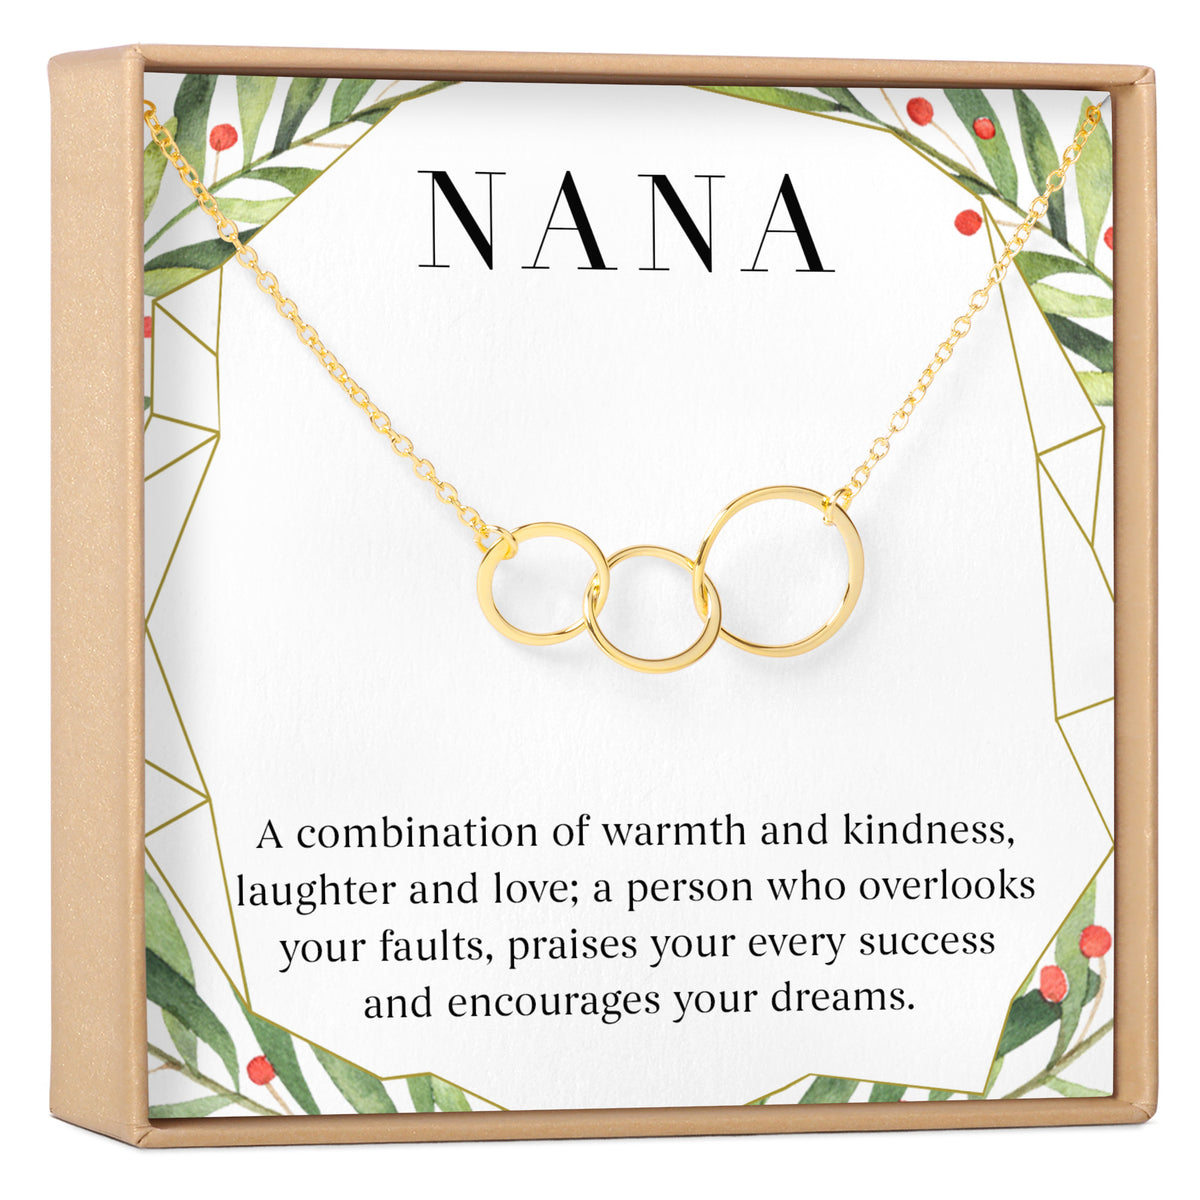 Christmas Gift for Grandmother: Present, Necklace, Jewelry, Xmas Gift, Holiday Gift, Gift Idea, Grandma, Nana, Mimi, Gift for Grandma, 2 Interlocking